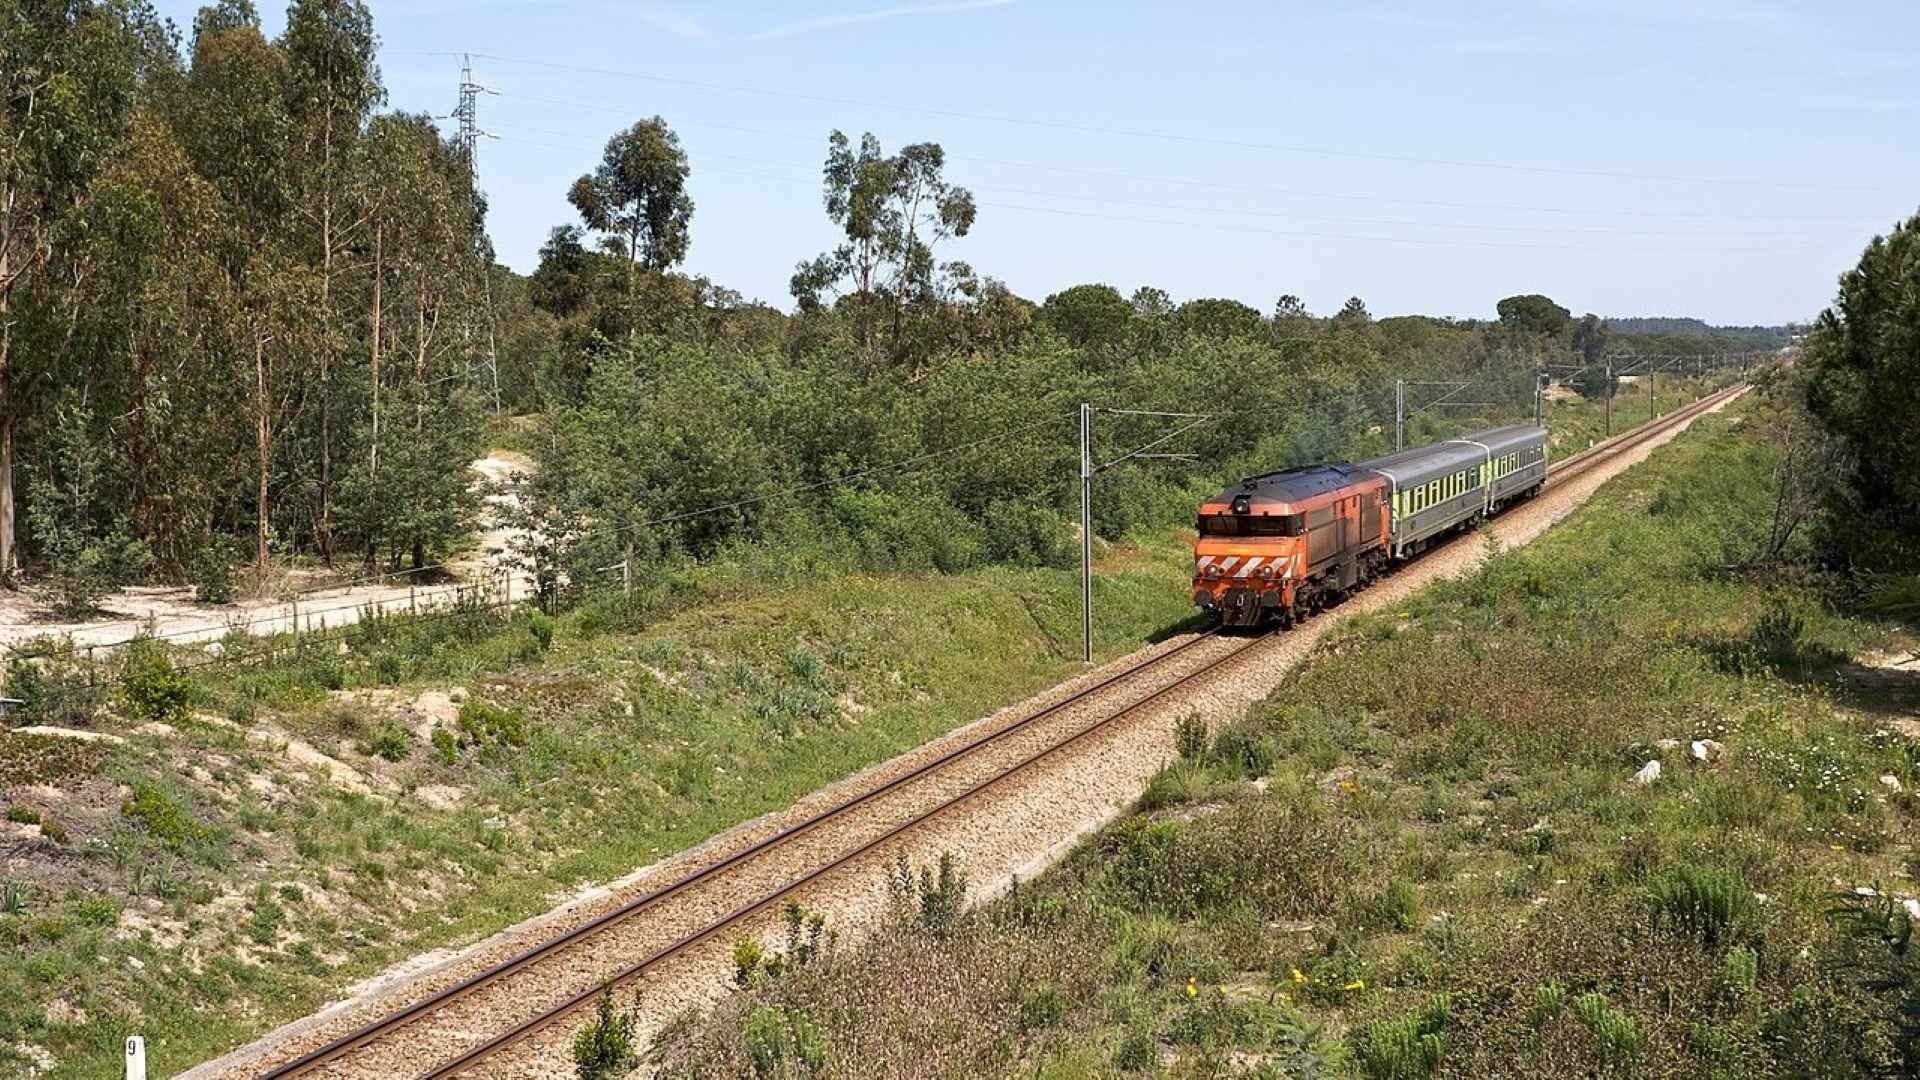 Socialistas defendem investimento na ferrovia no Baixo Alentejo